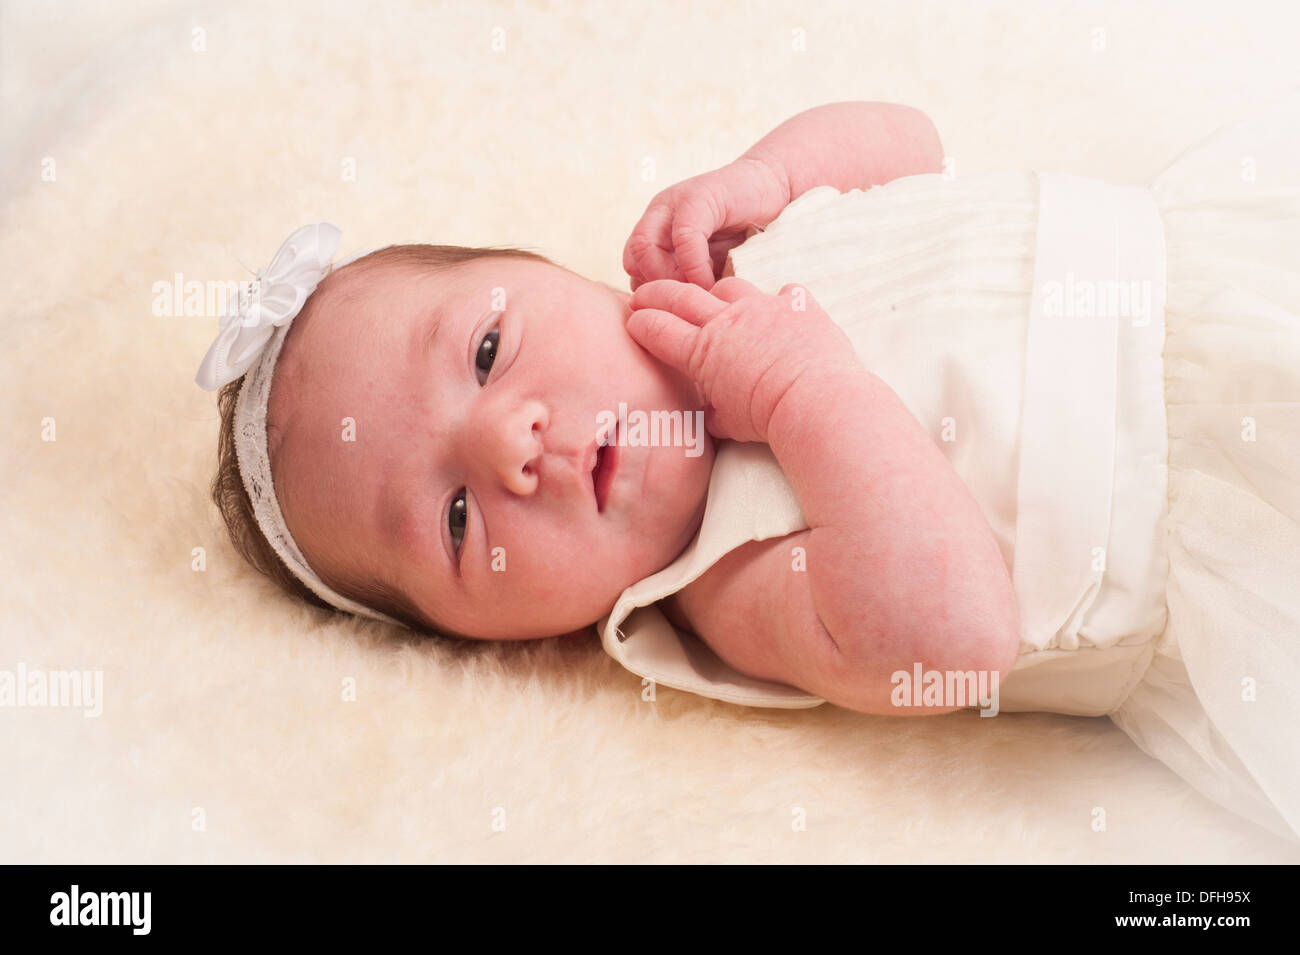 Newborn baby girl with white hair band in cream coloured dress Stock Photo